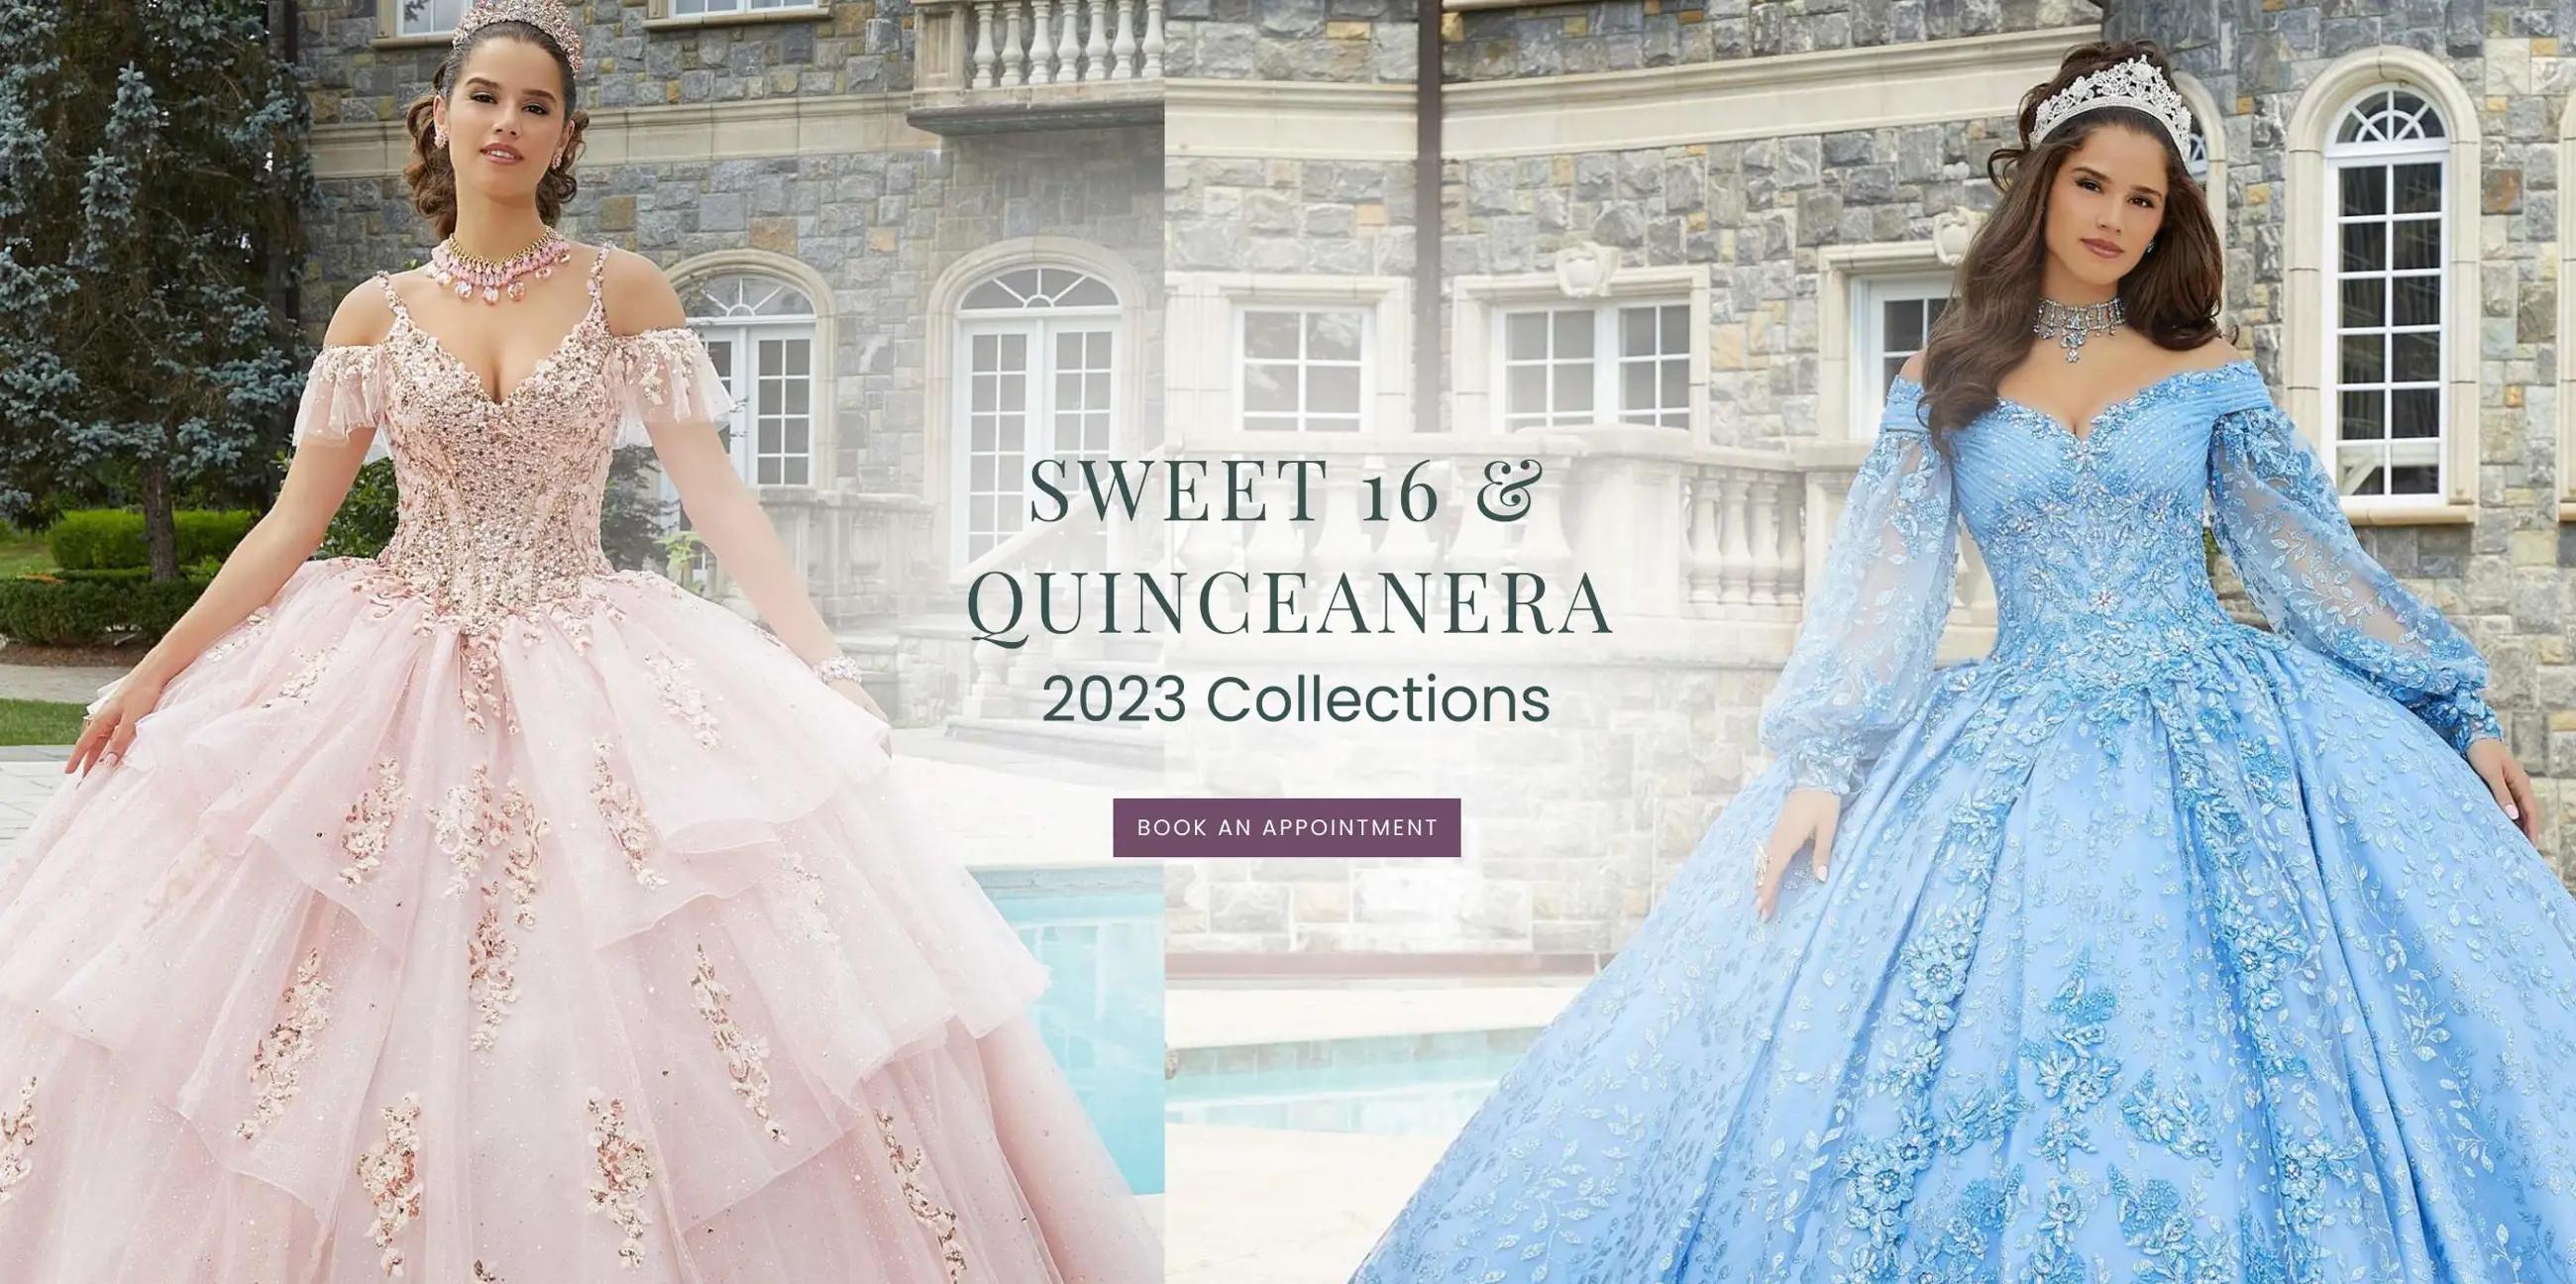 Banner Promoting Quinceanera Dresses